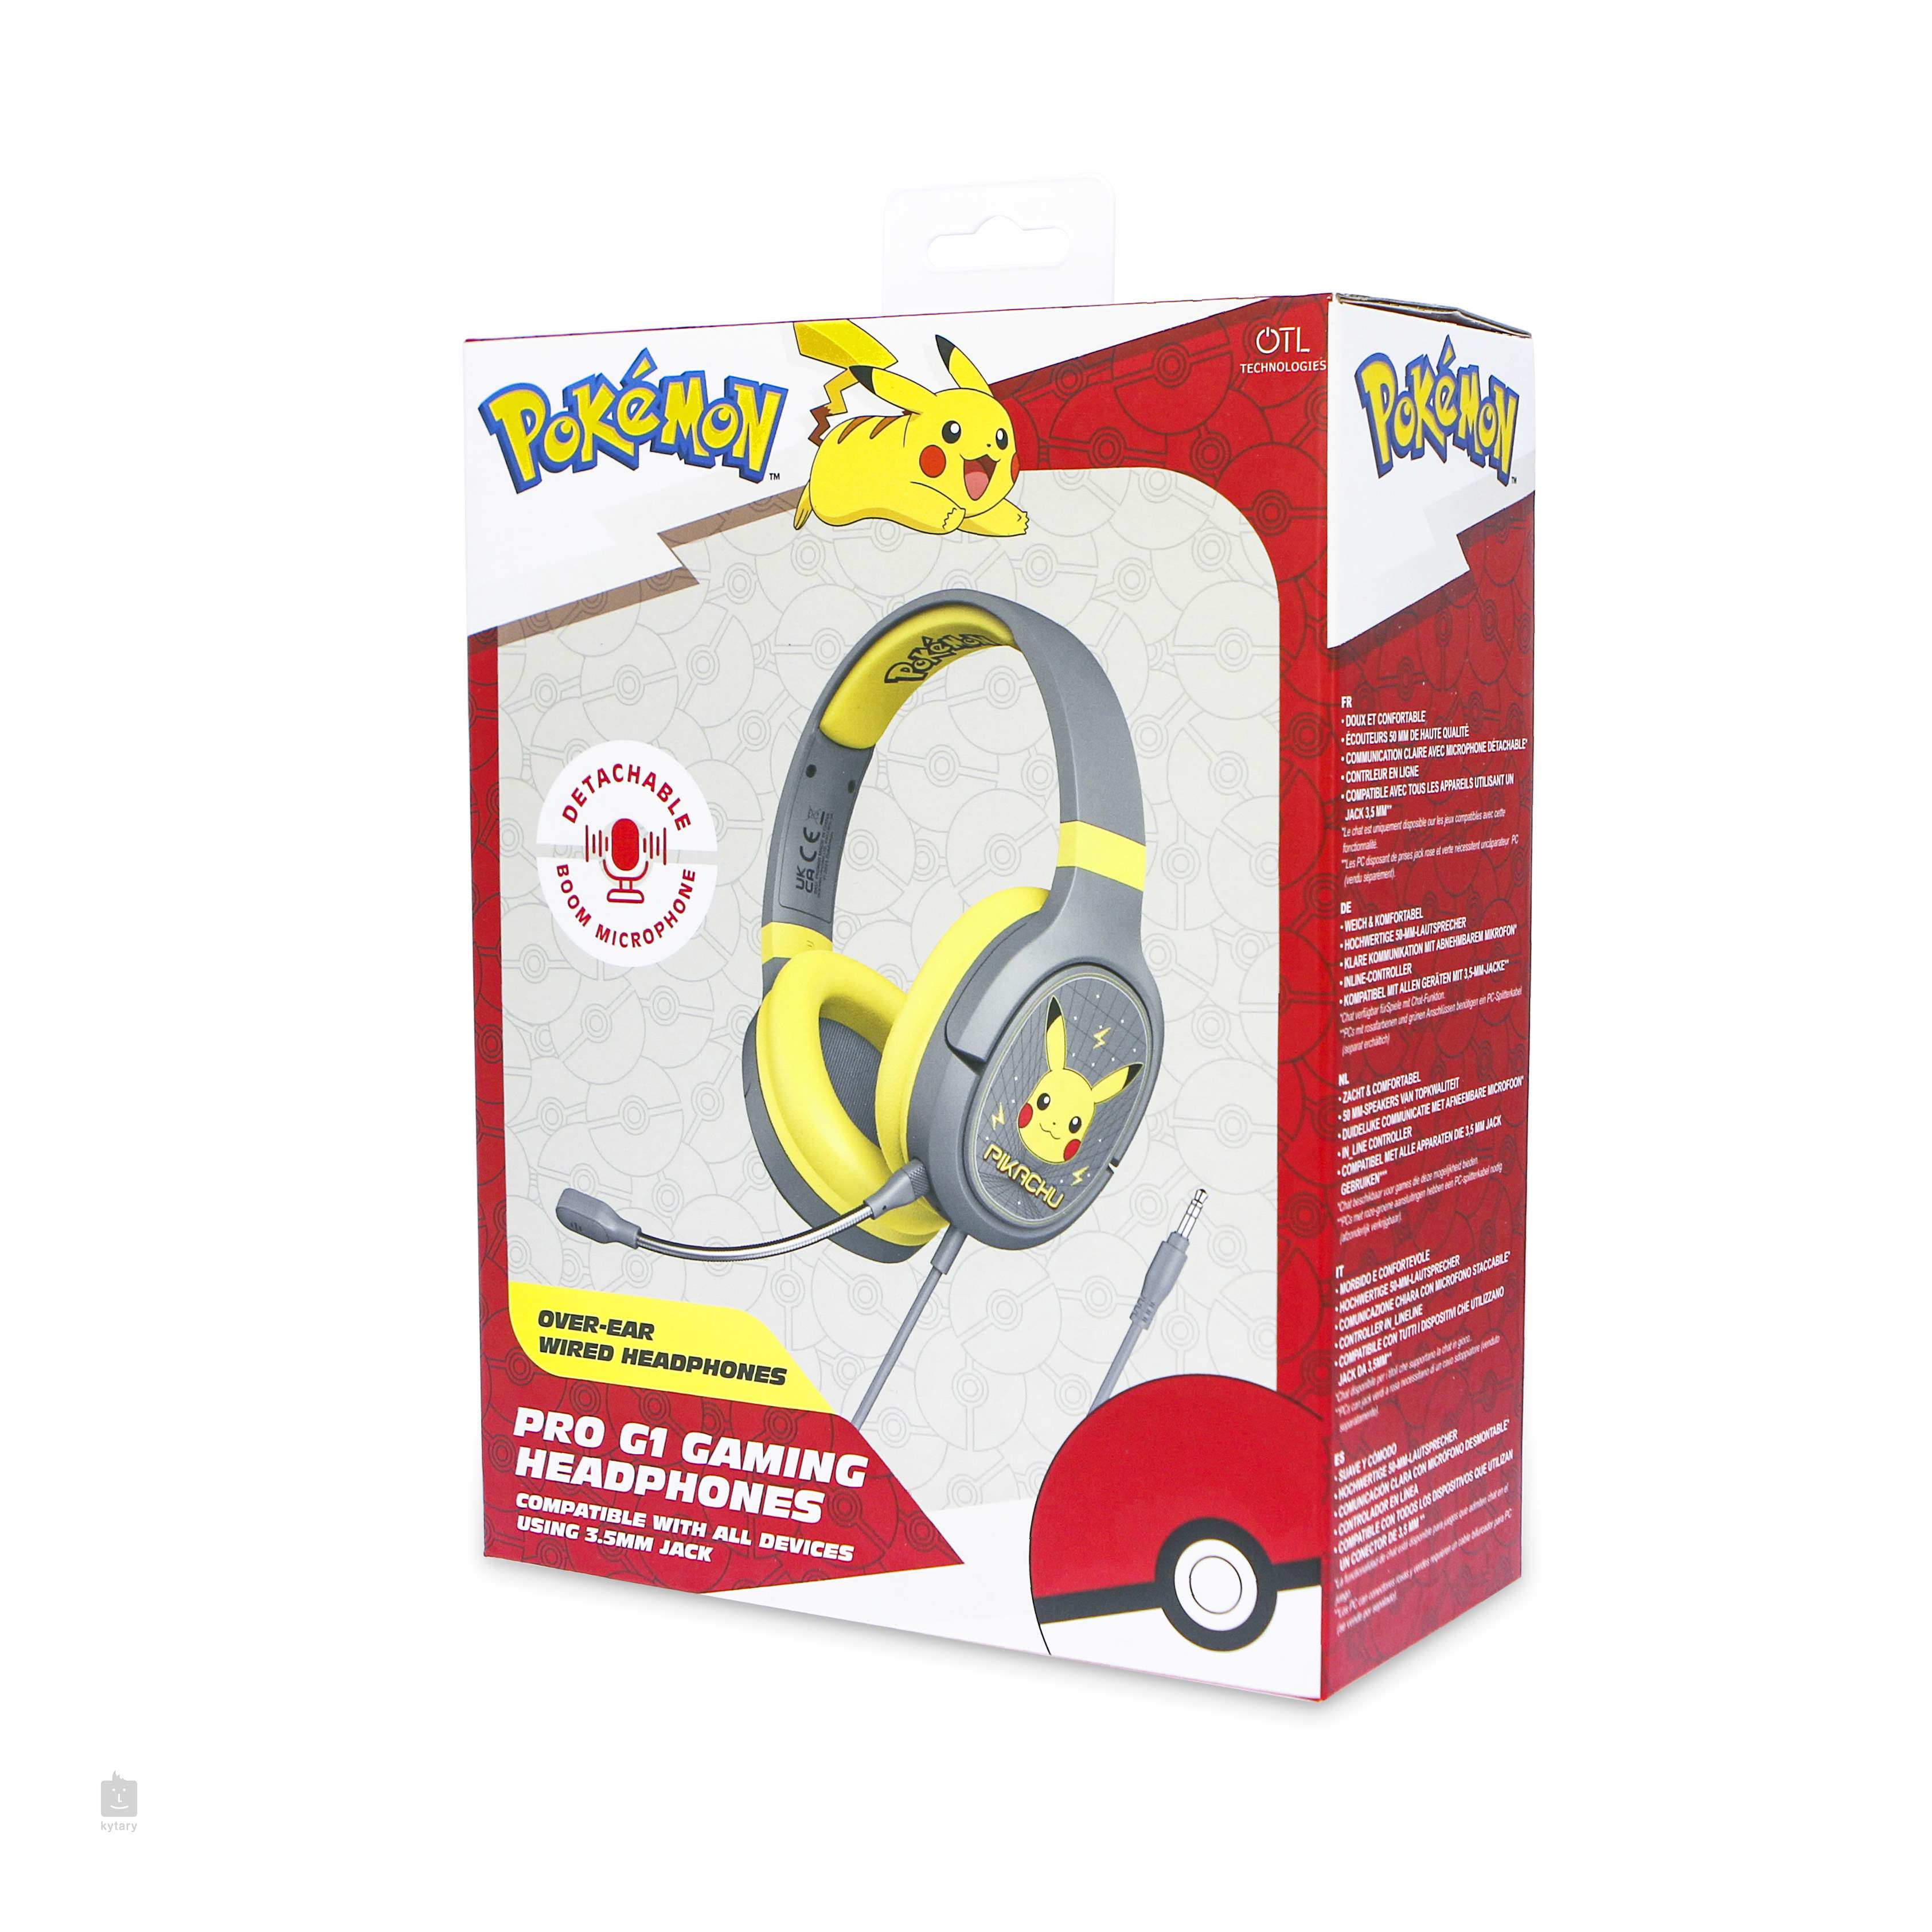 OTL Pokémon Pikachu PRO G1 Gaming Headphones Headphones